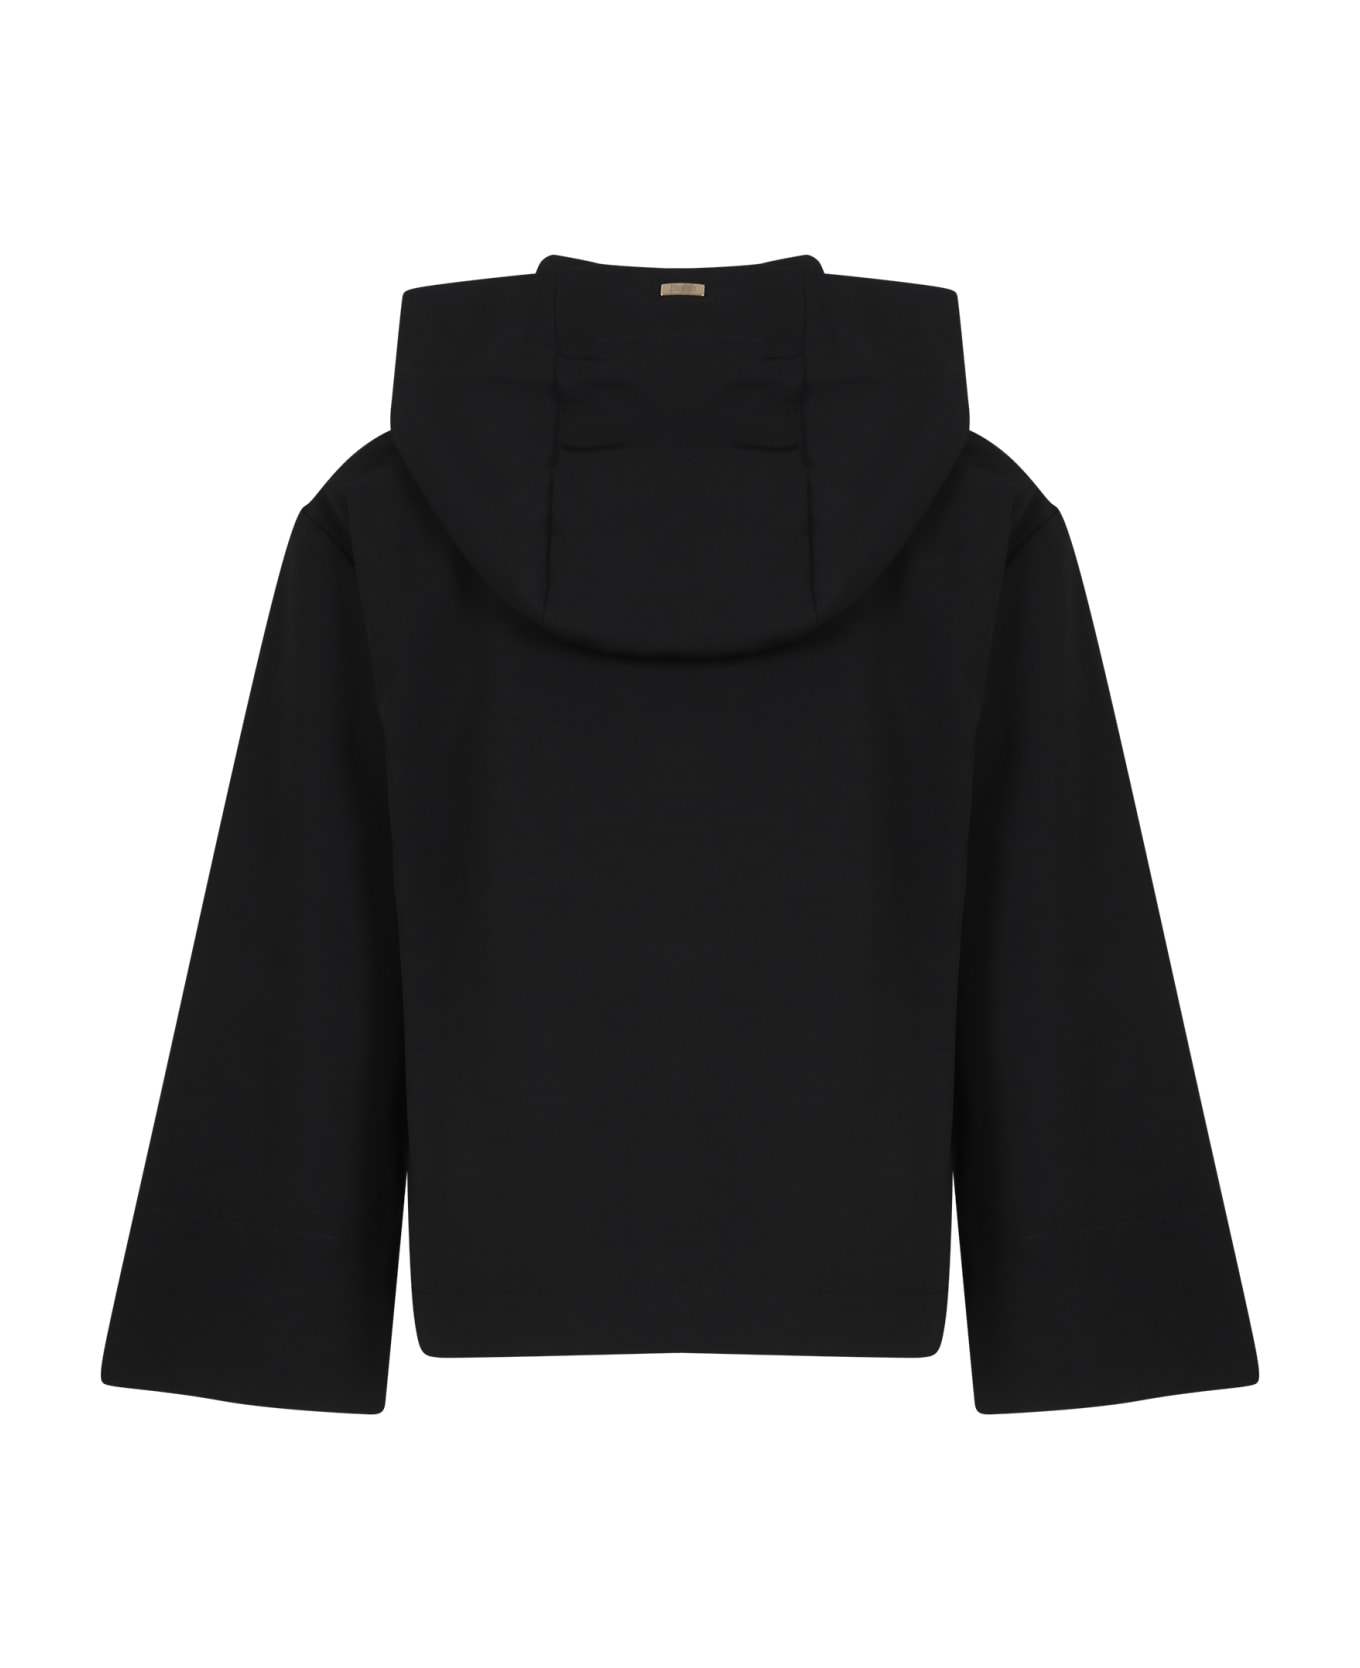 Herno Black Jacket For Girl With Logo - Black